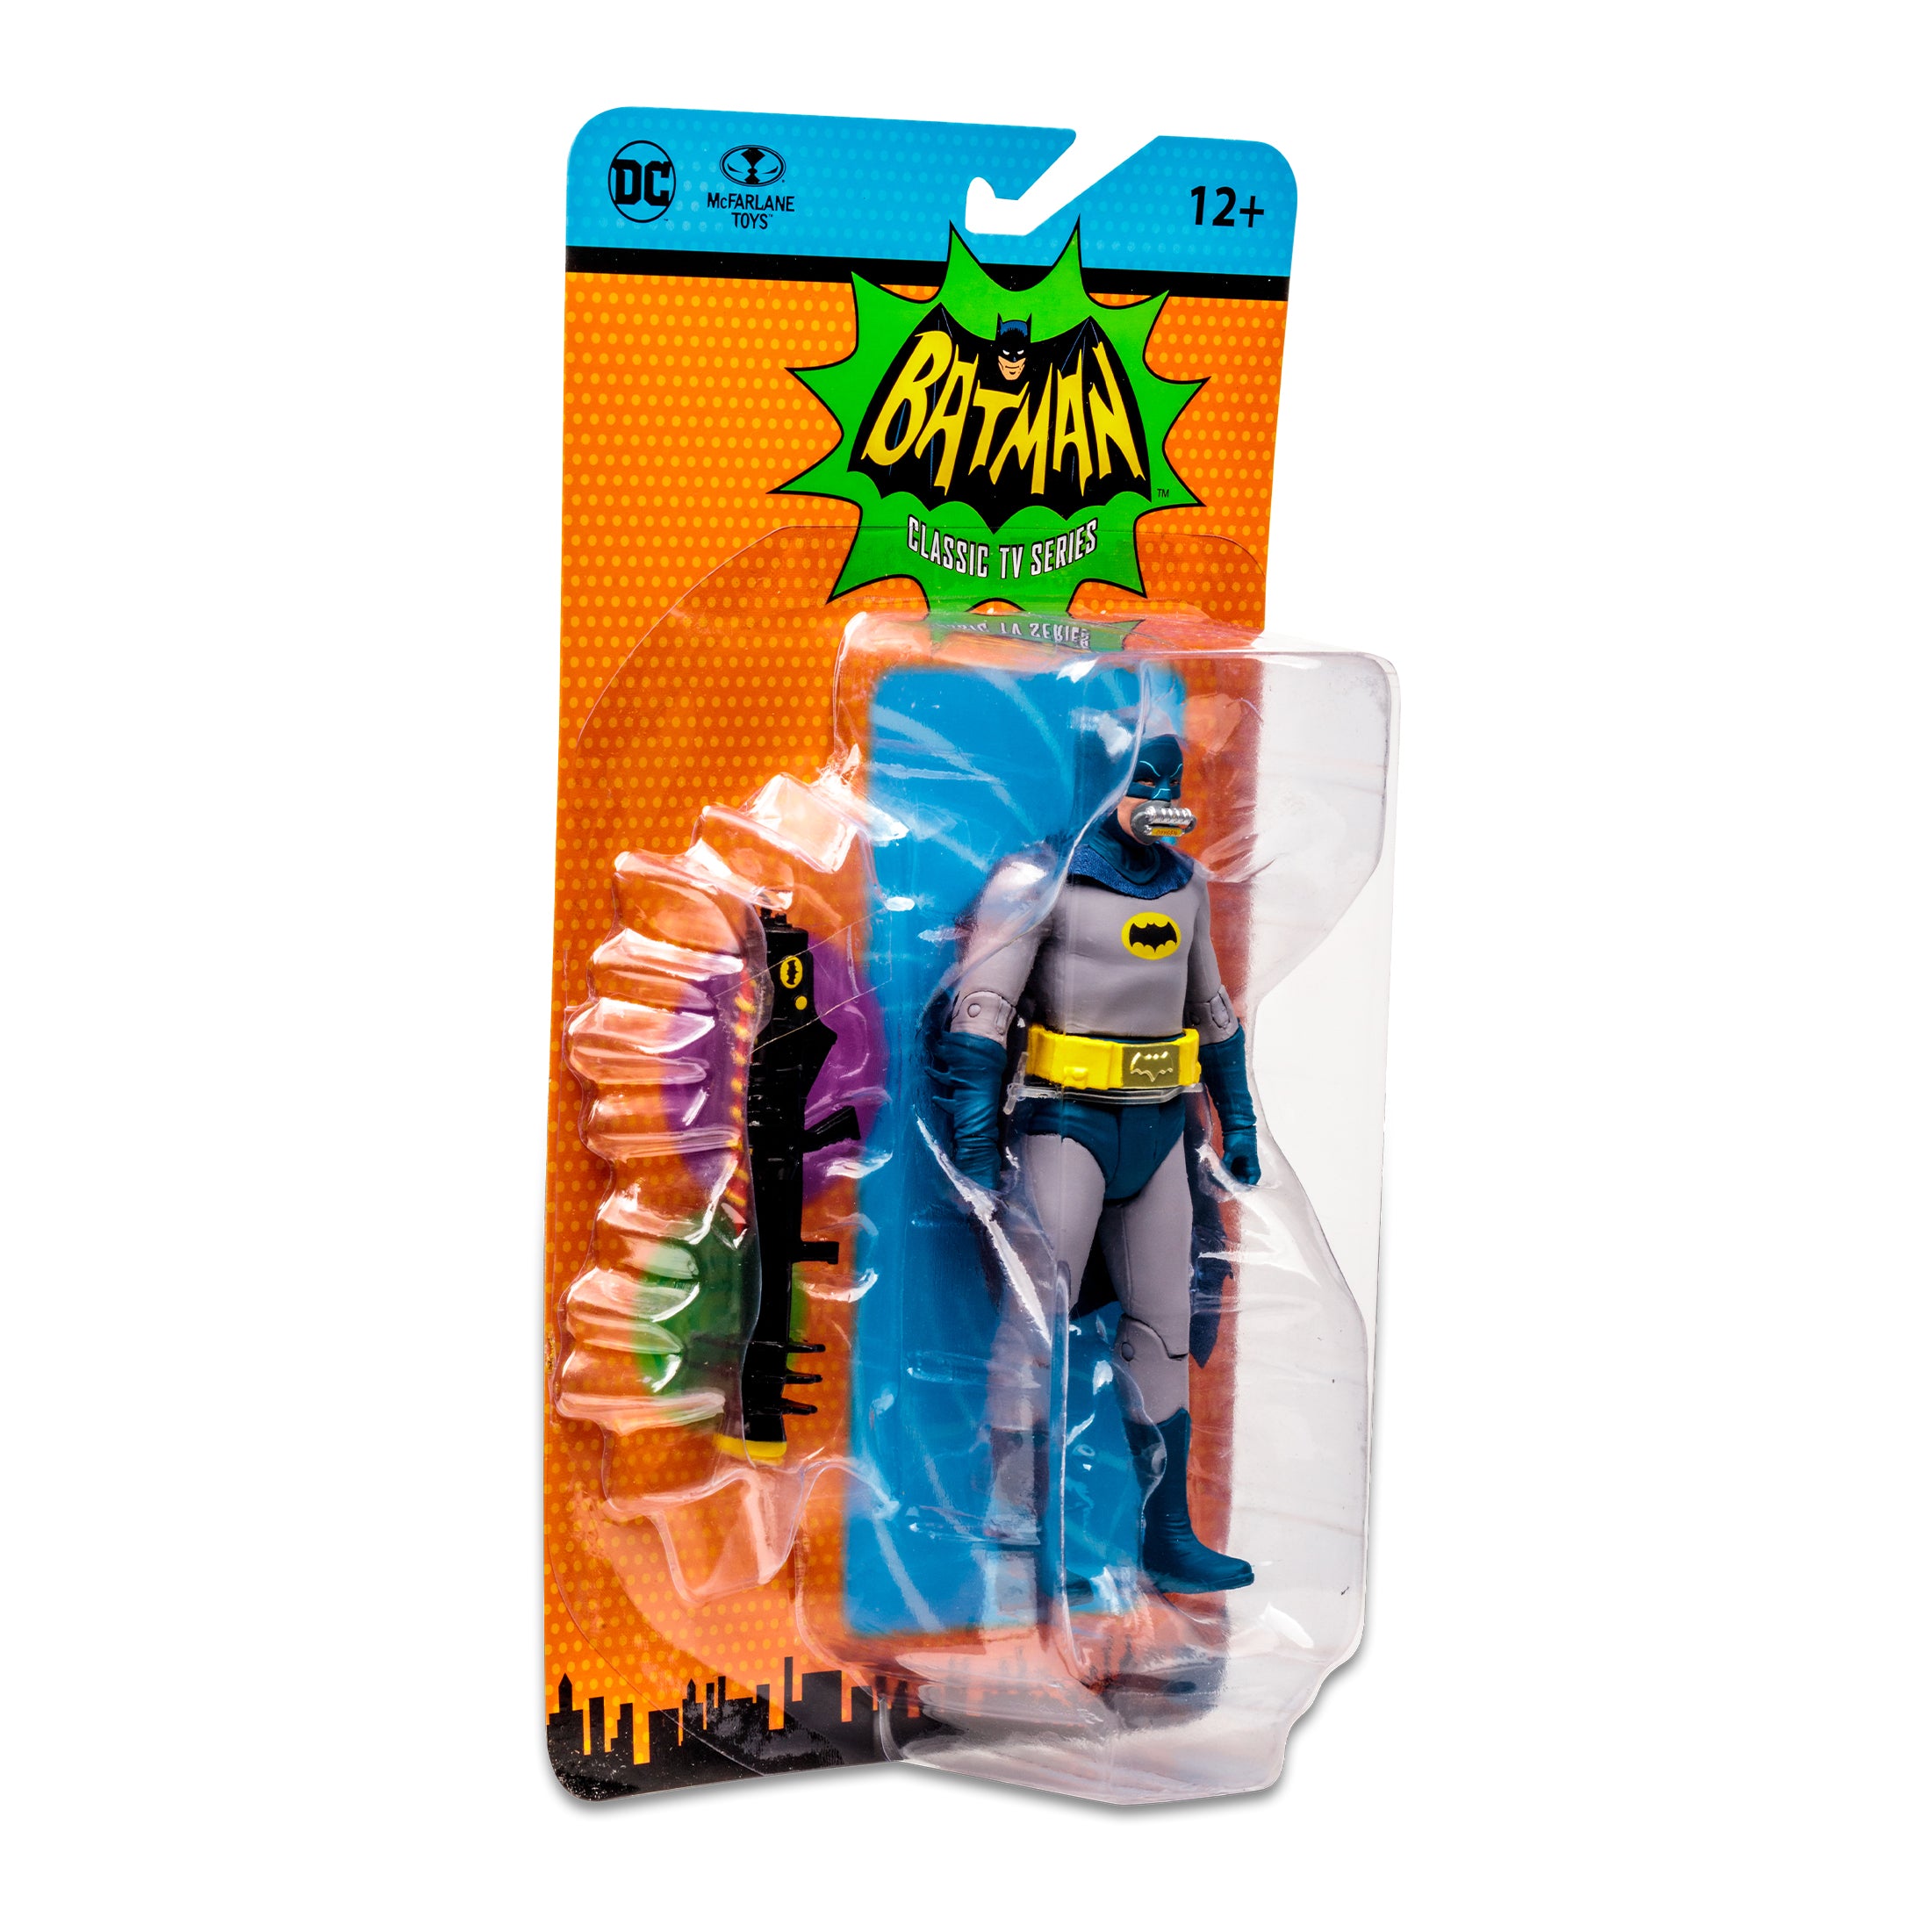 McFarlane DC Retro Figura de Accion: Batman 66 Classic TV Series - Batman Con Mascaras De Oxigeno